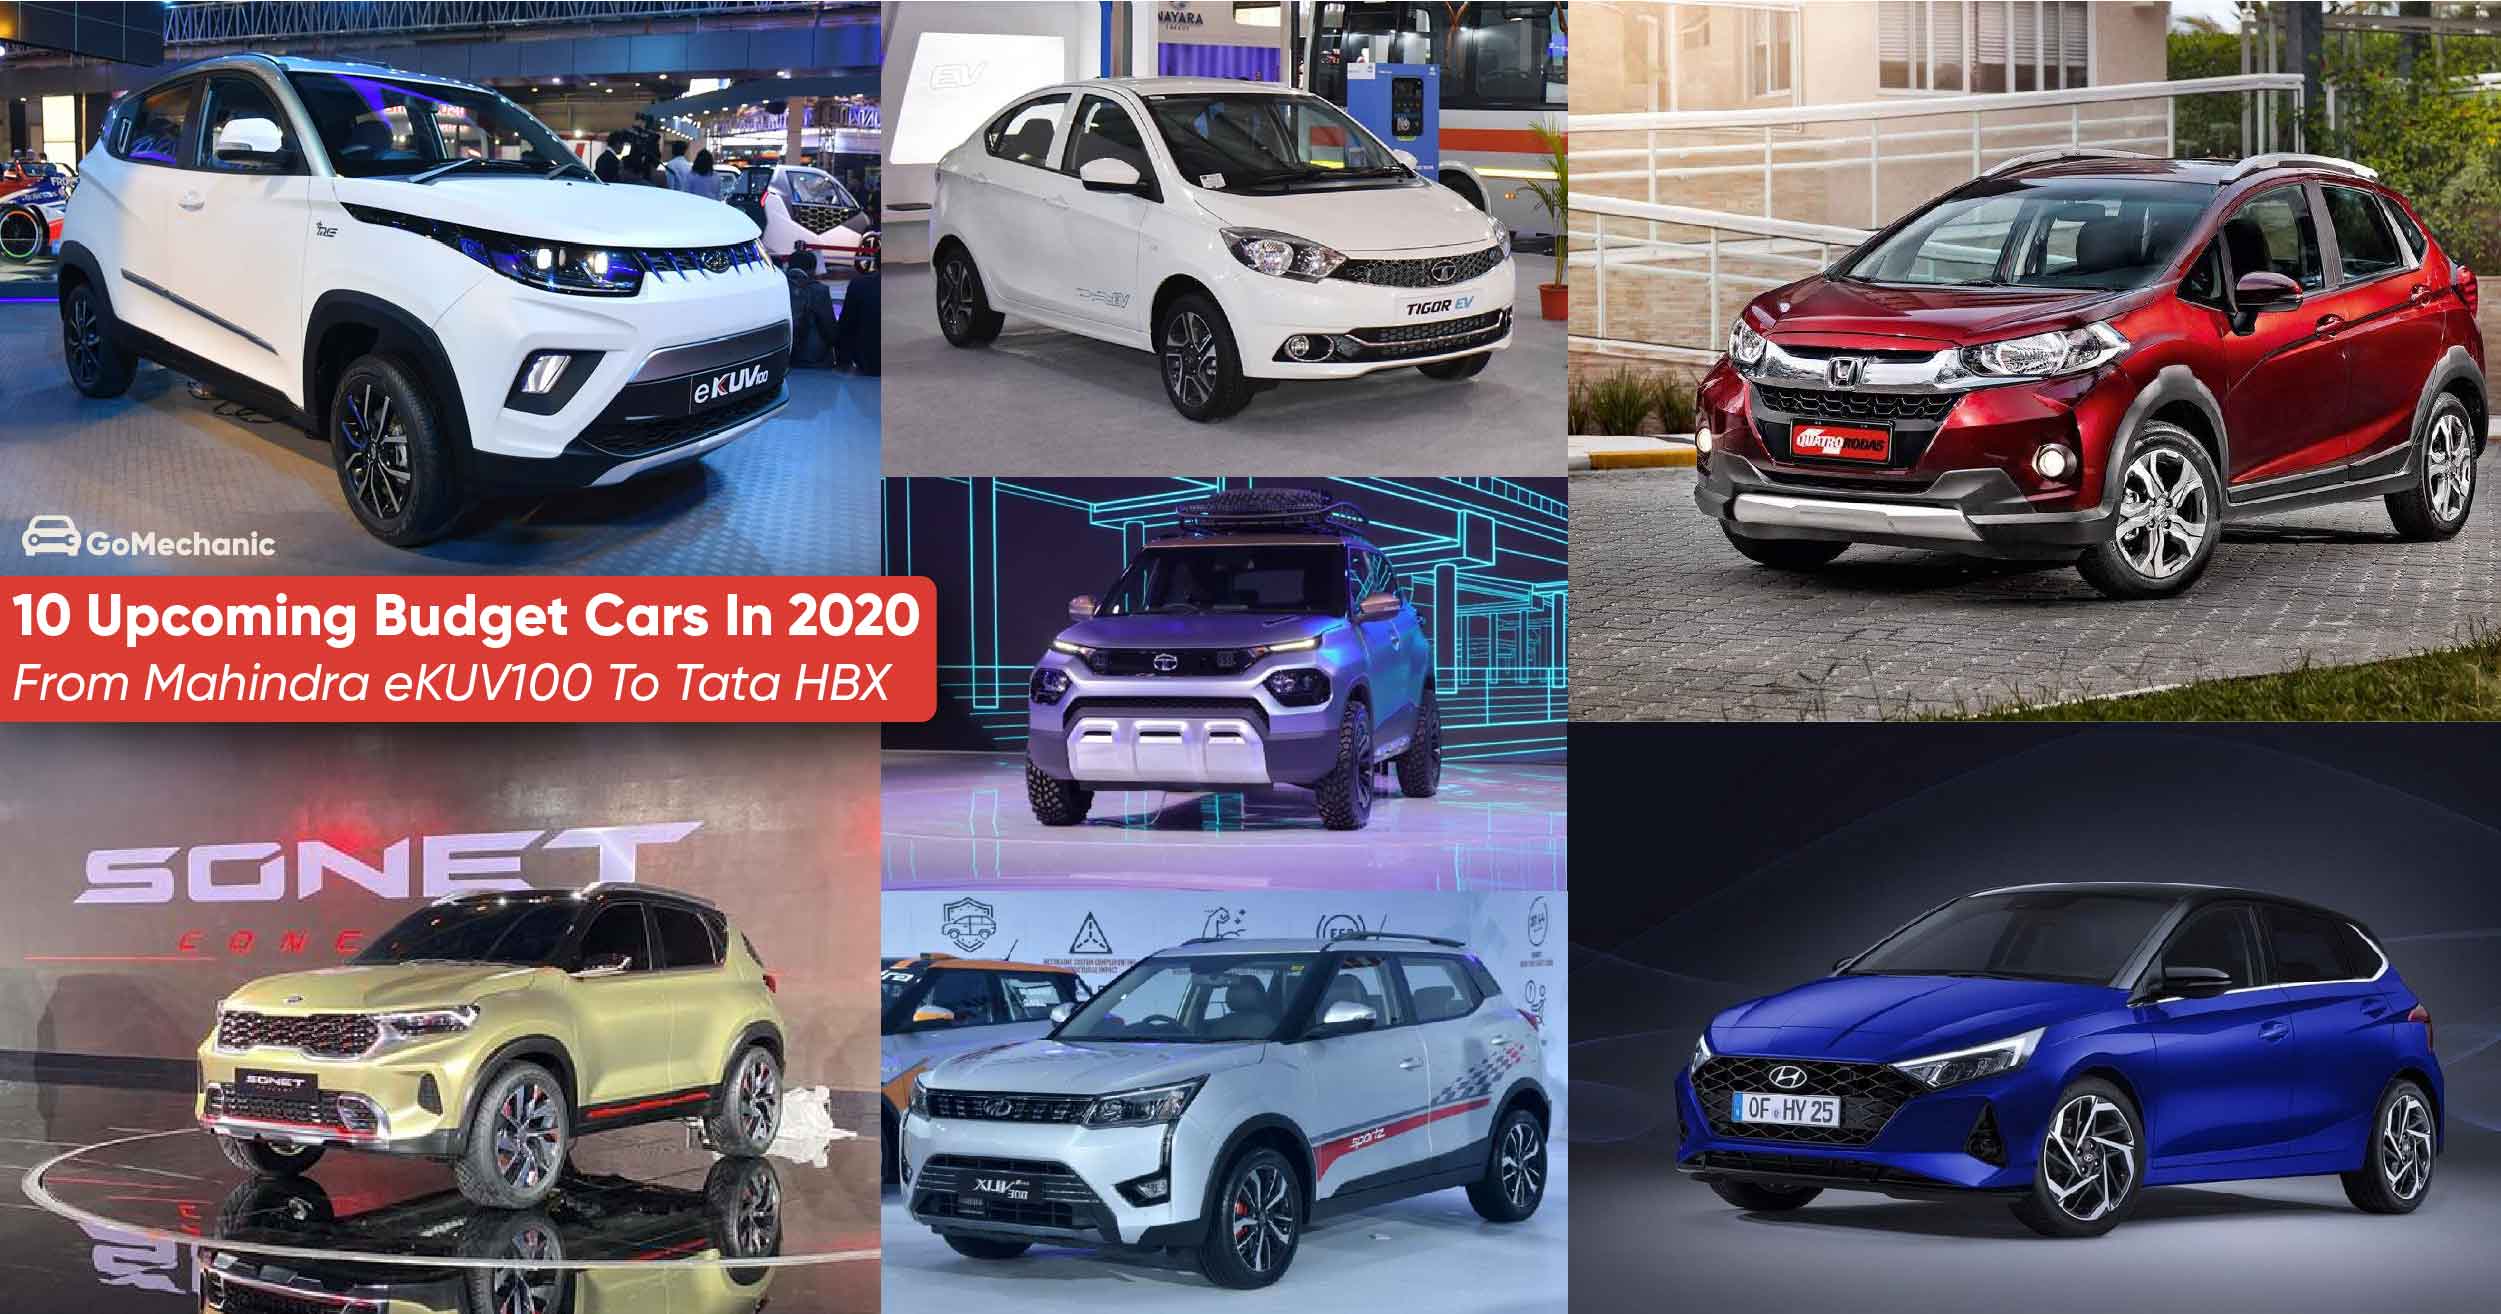 10 Upcoming Budget Cars In 2020: From Mahindra eKUV100 To Tata HBX